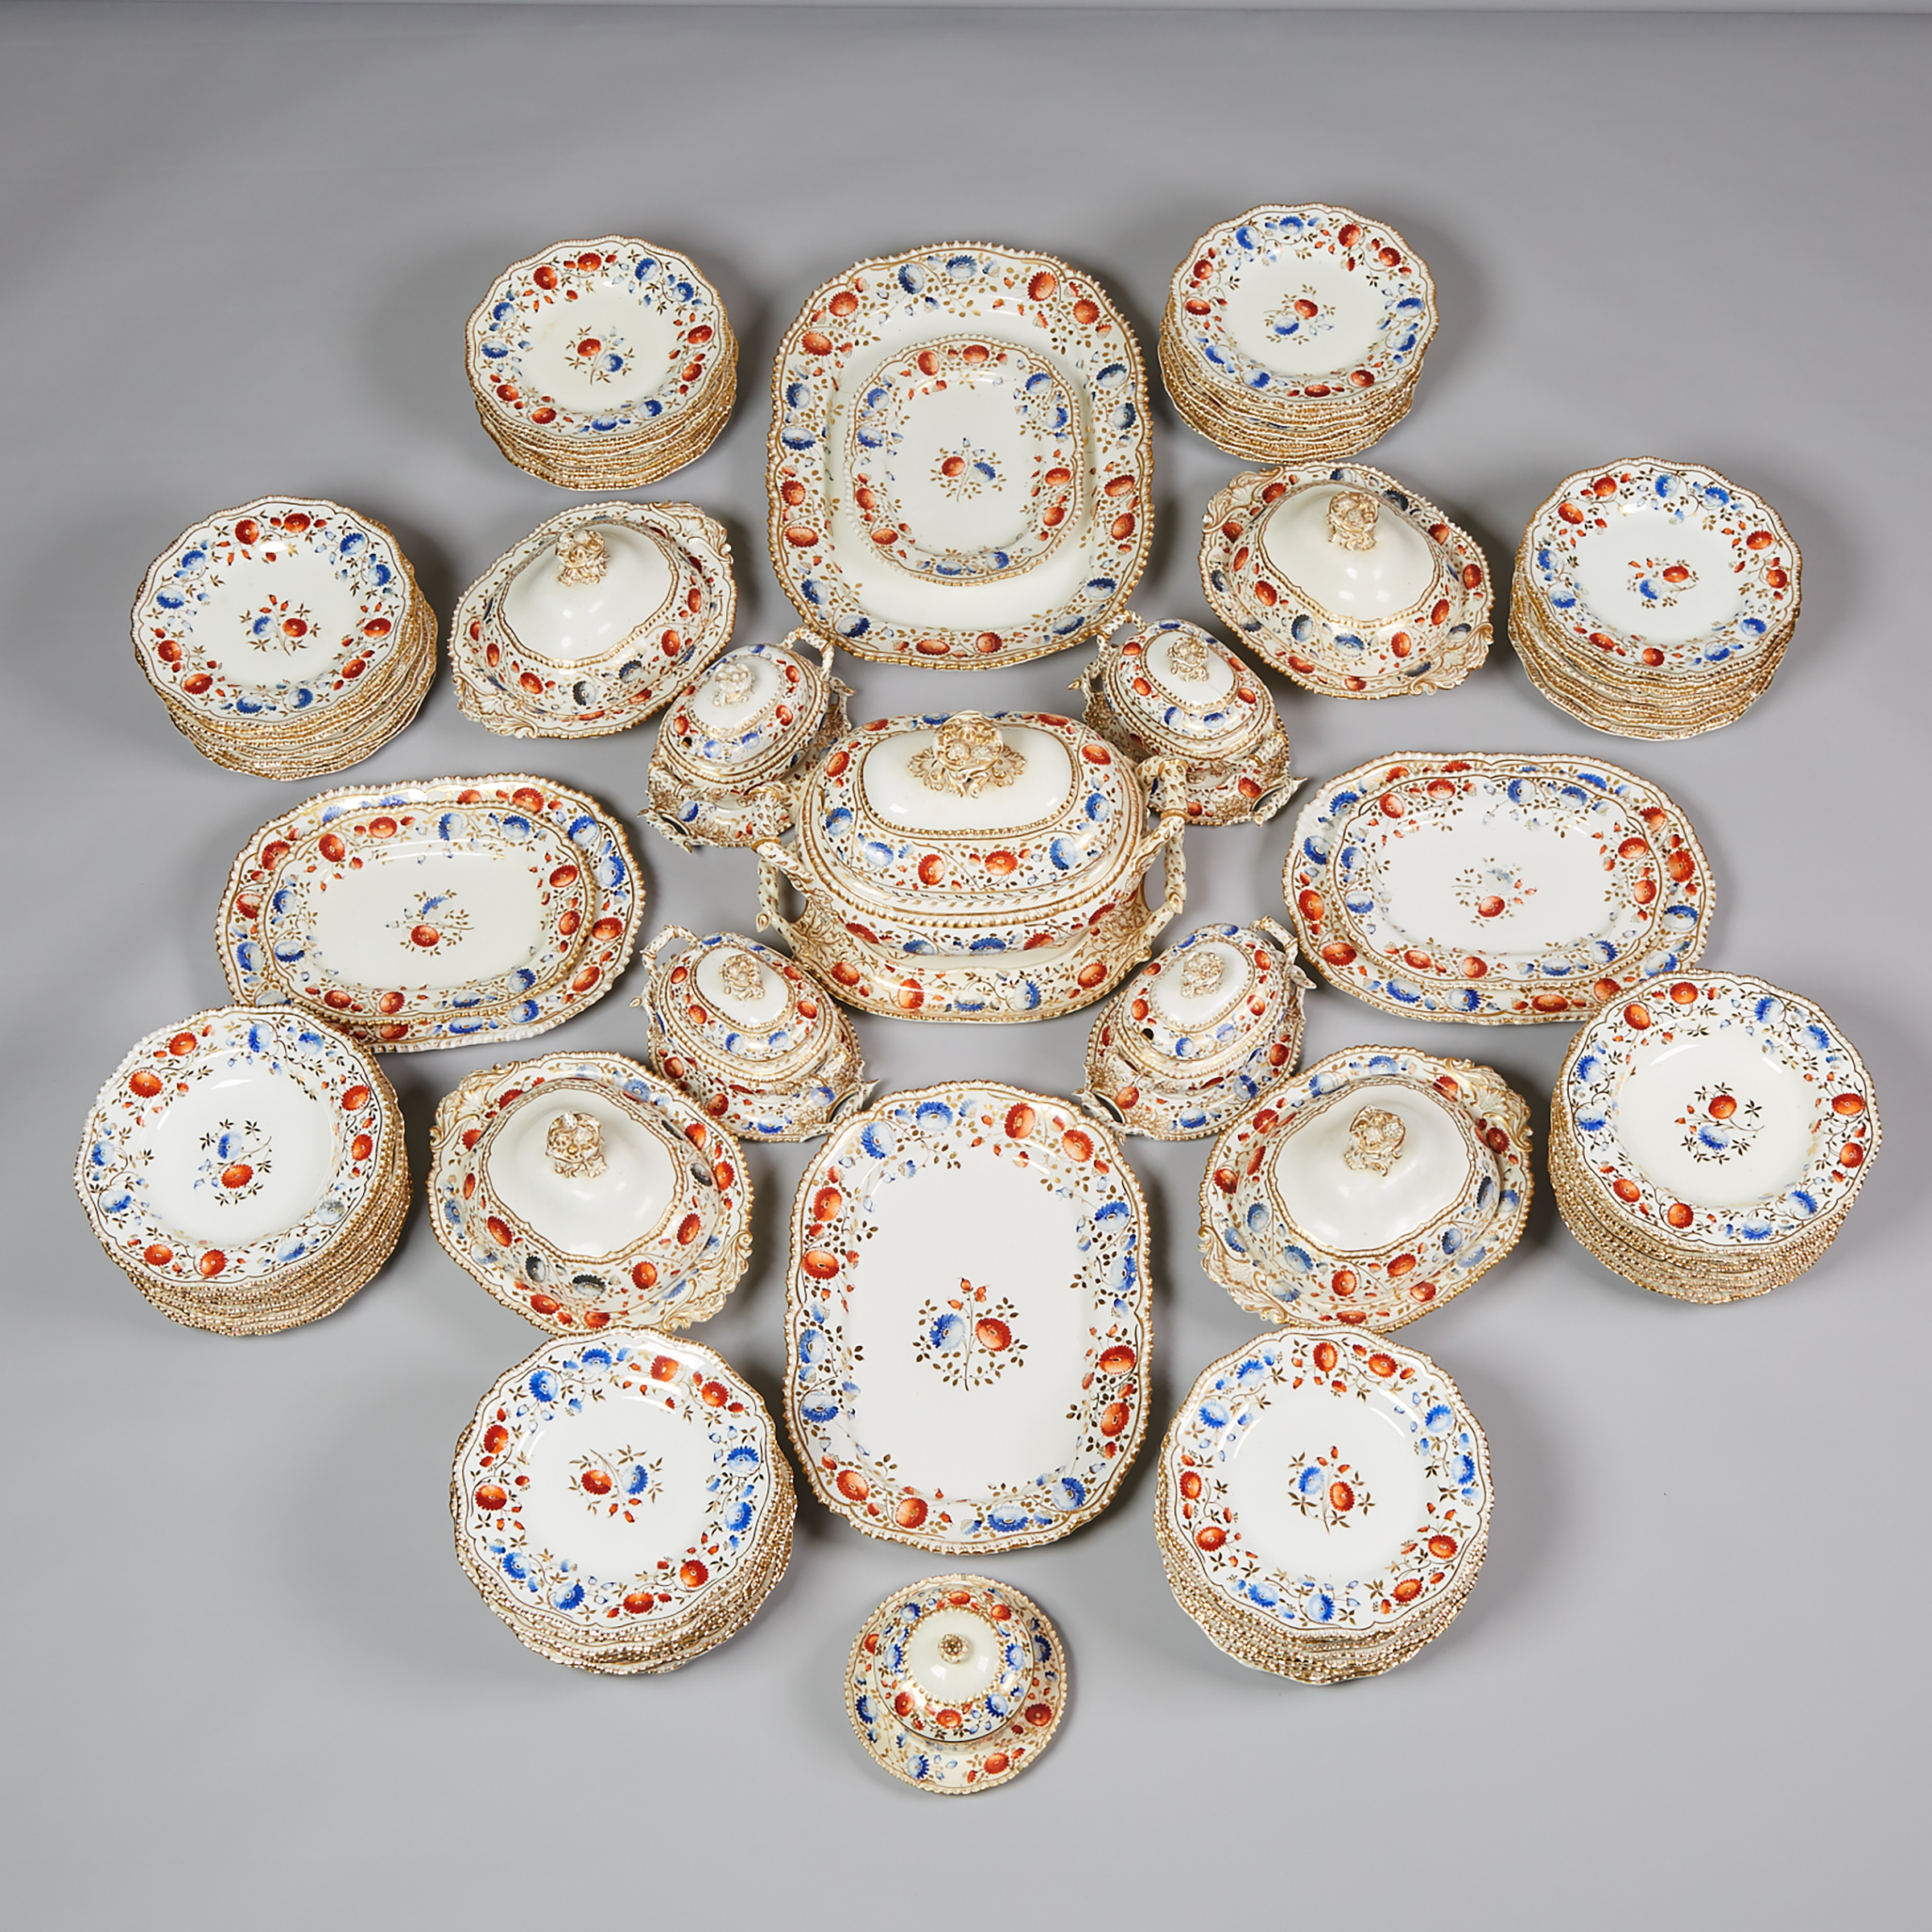 English Porcelain Dinner Service, possibly Coalport or Davenport, c.1820